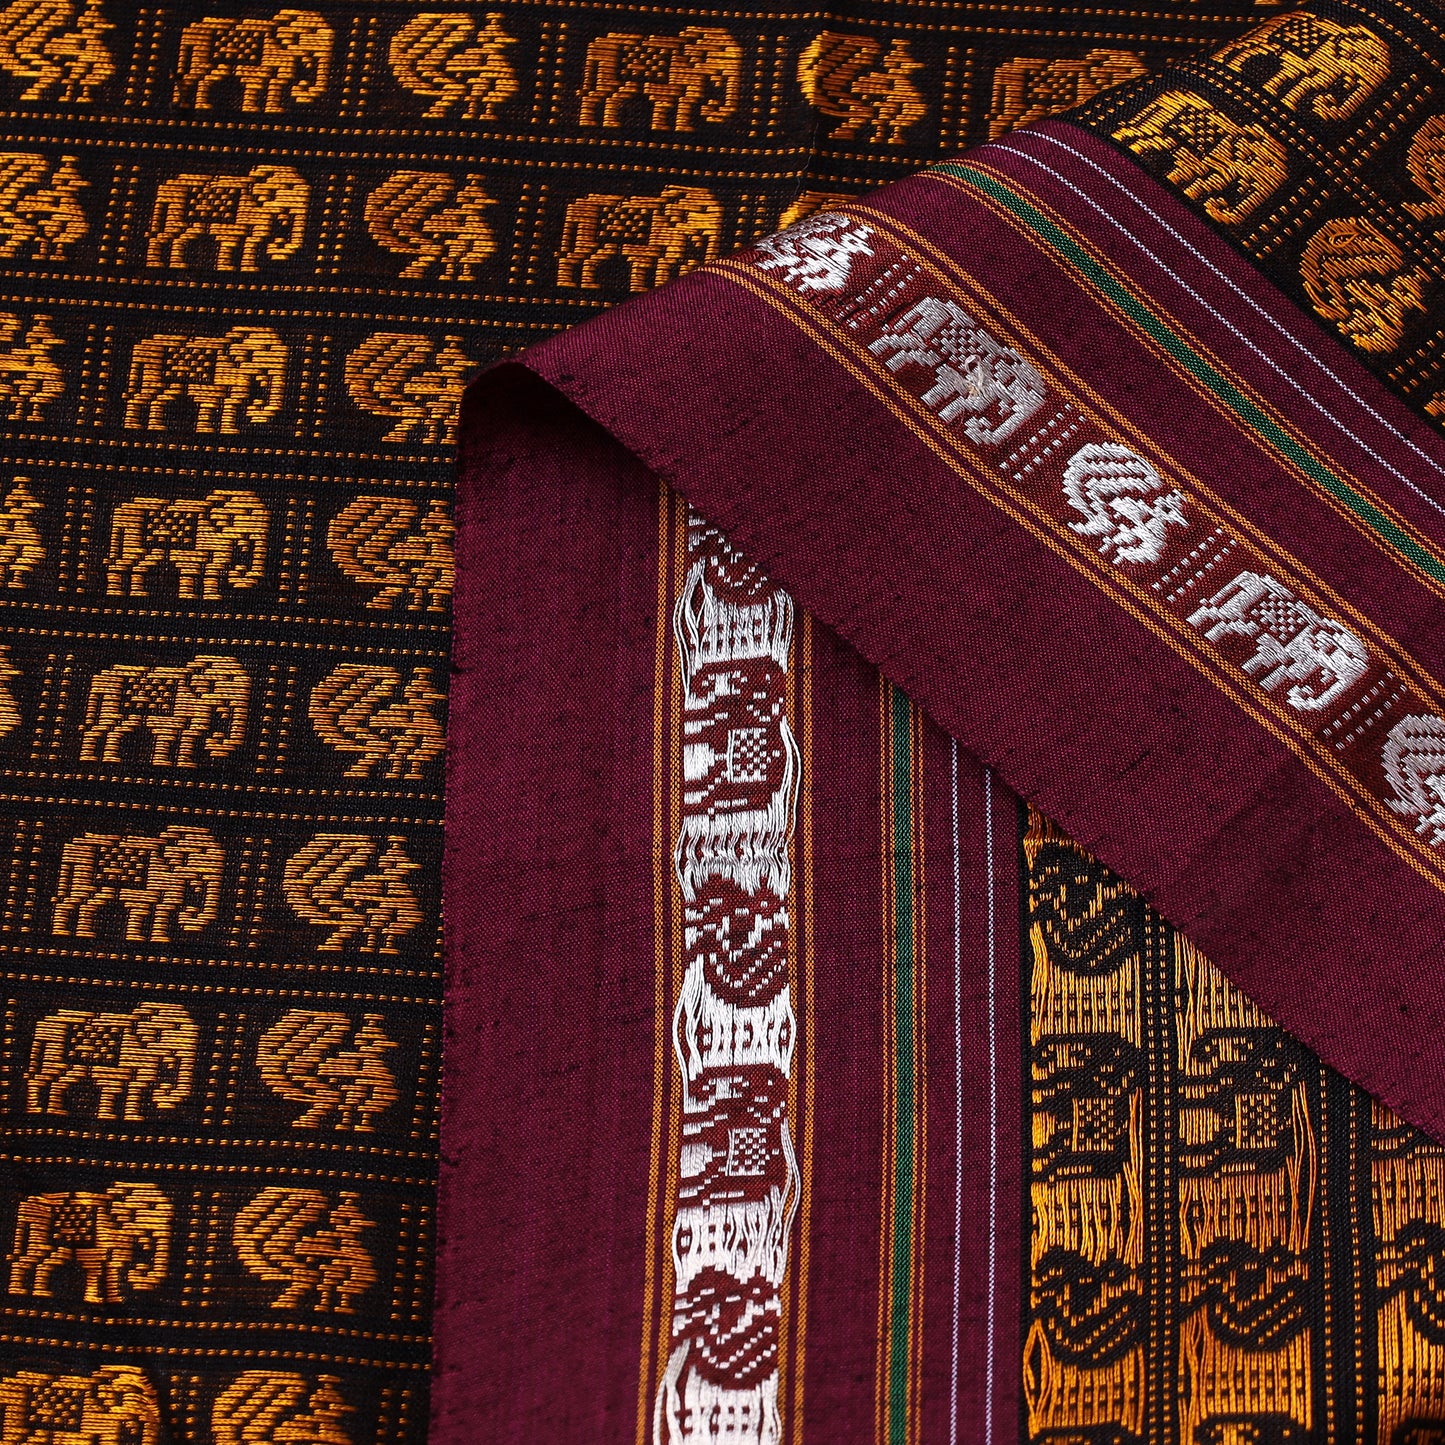 Yellow - Karnataka Khun Weave Elephant & Peacock Motif Cotton Fabric